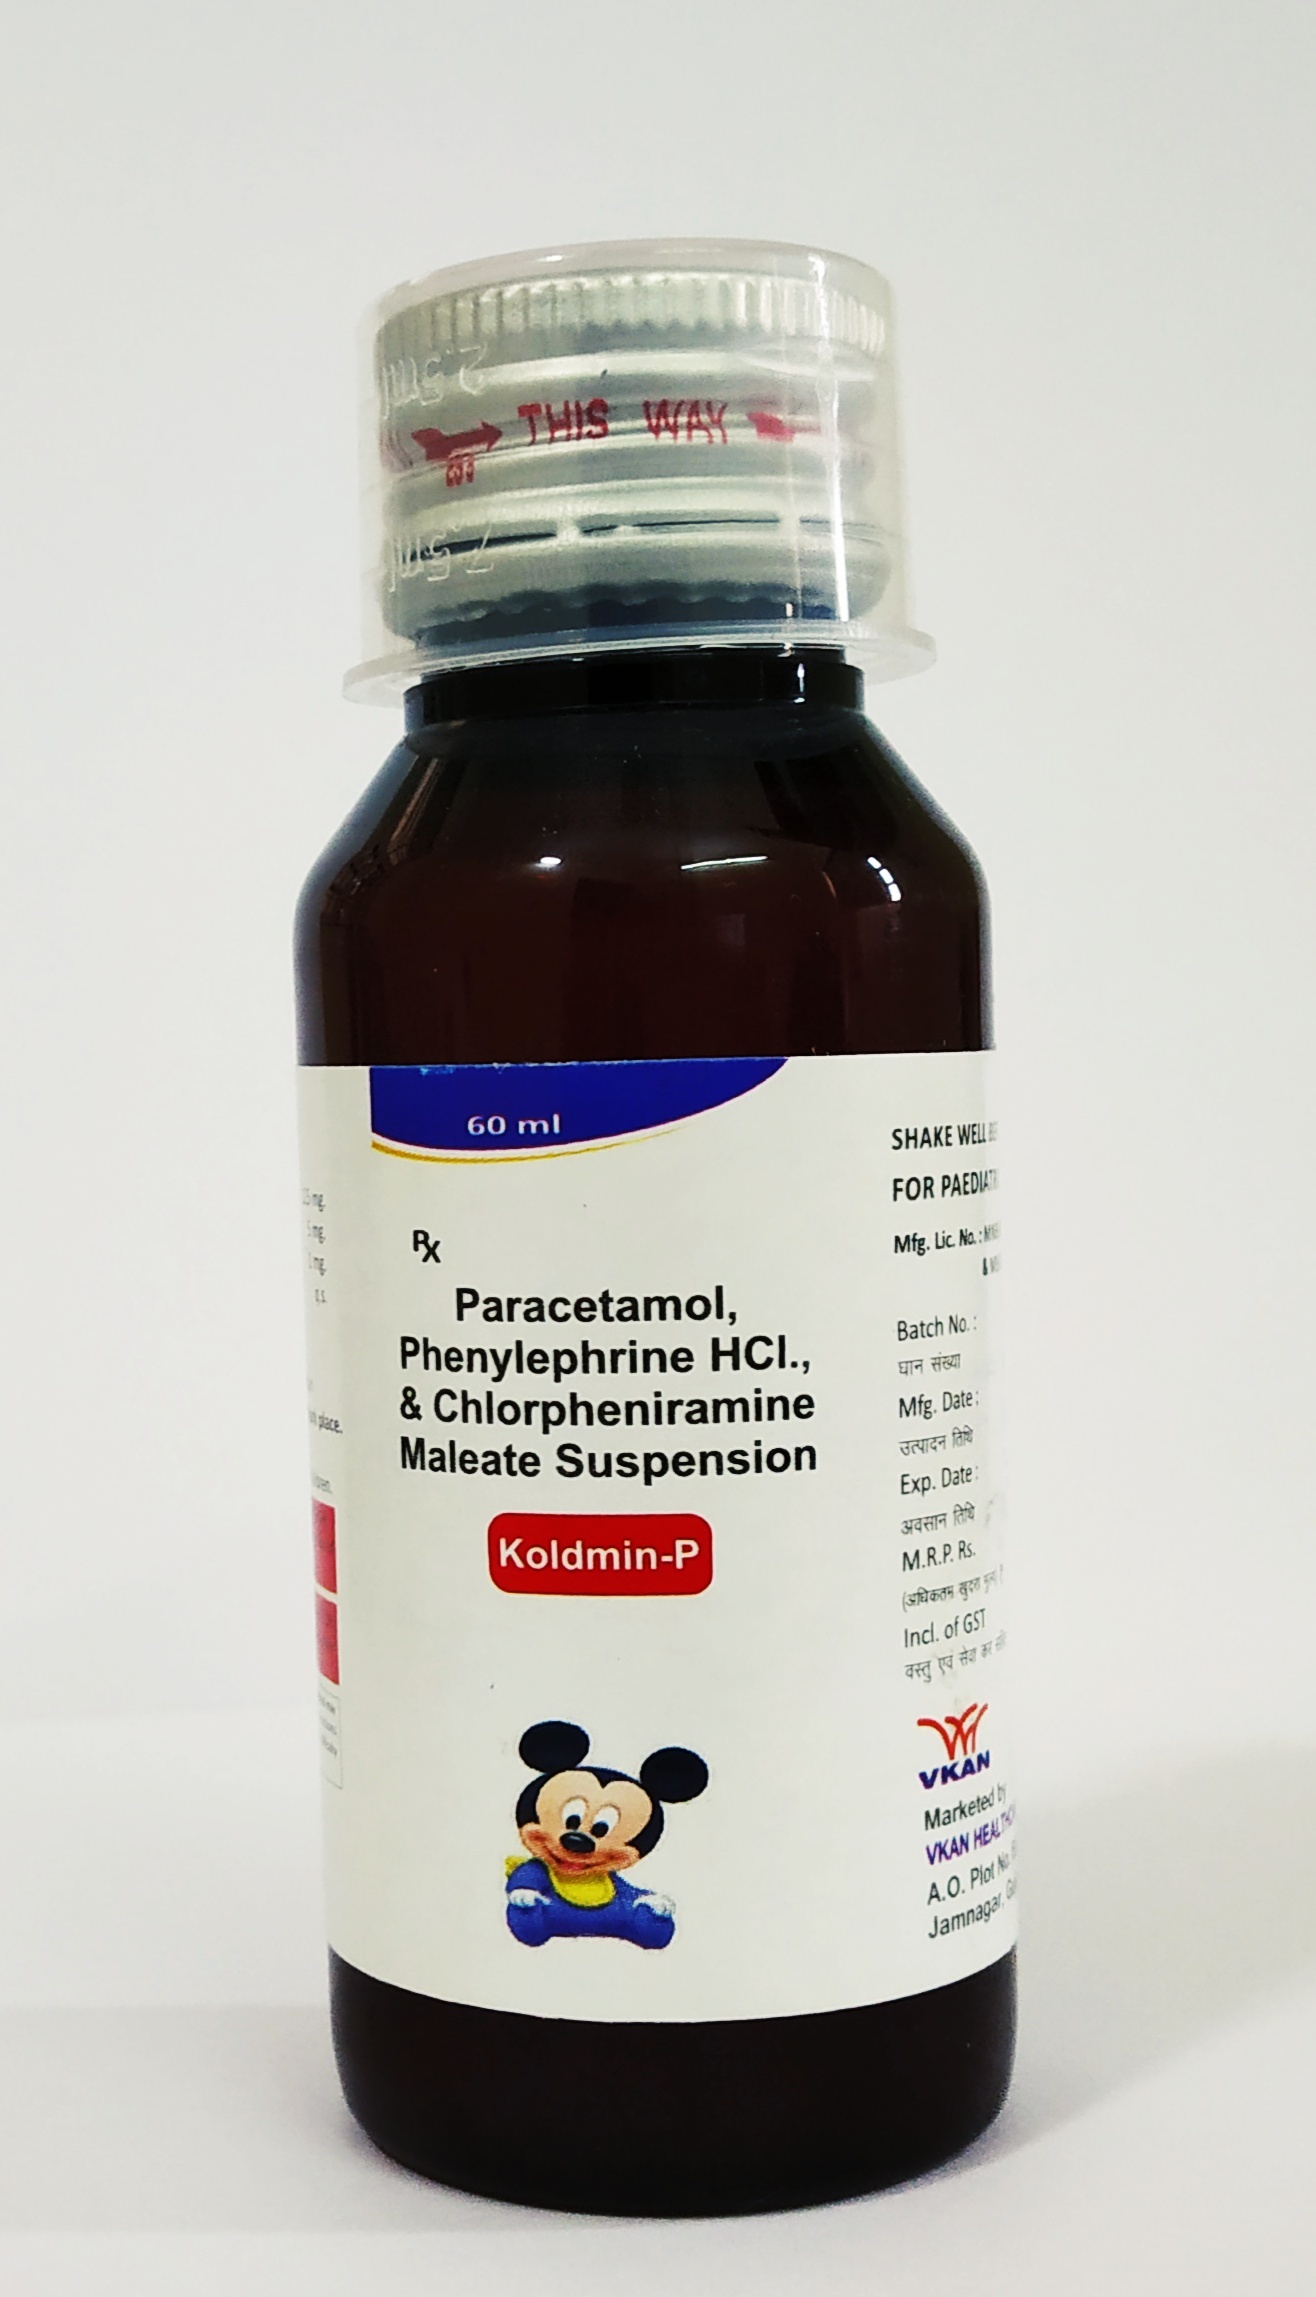 Paracetamol 125 mg + Phenylephrine HCL 5 mg + Chlorpheniramine Maleate 1 mg